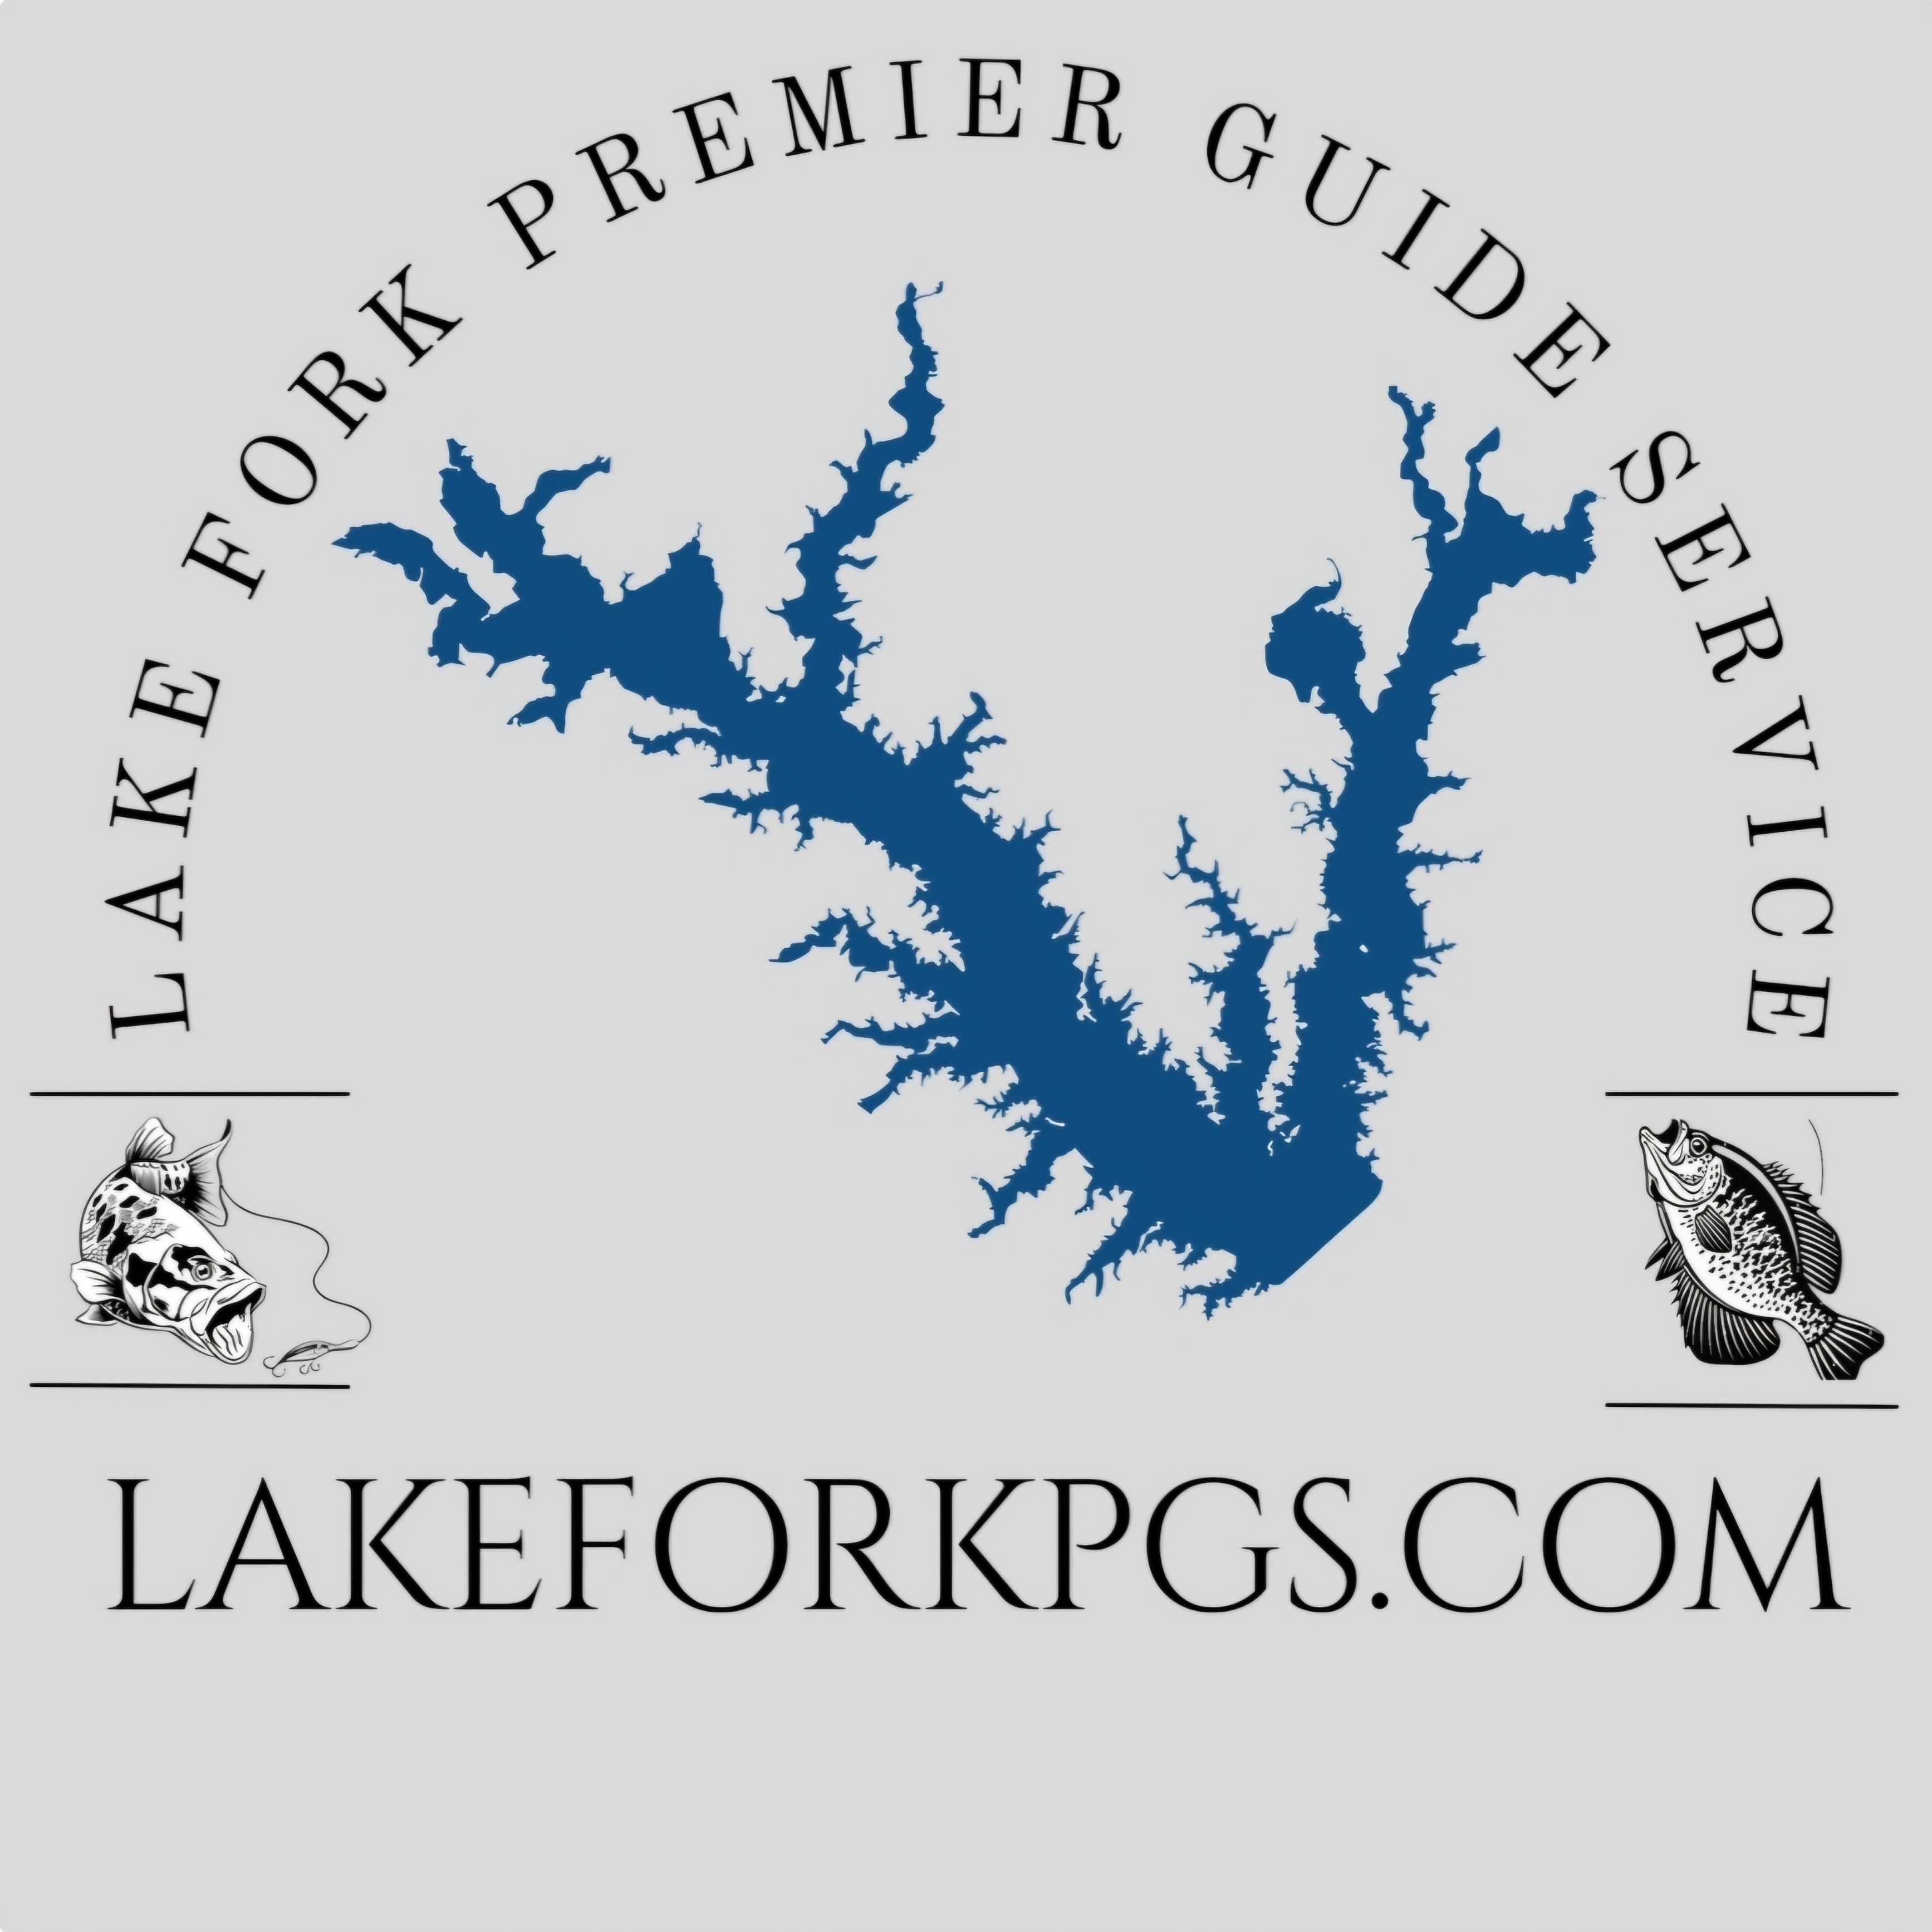 Lake Fork Premier Guide Service